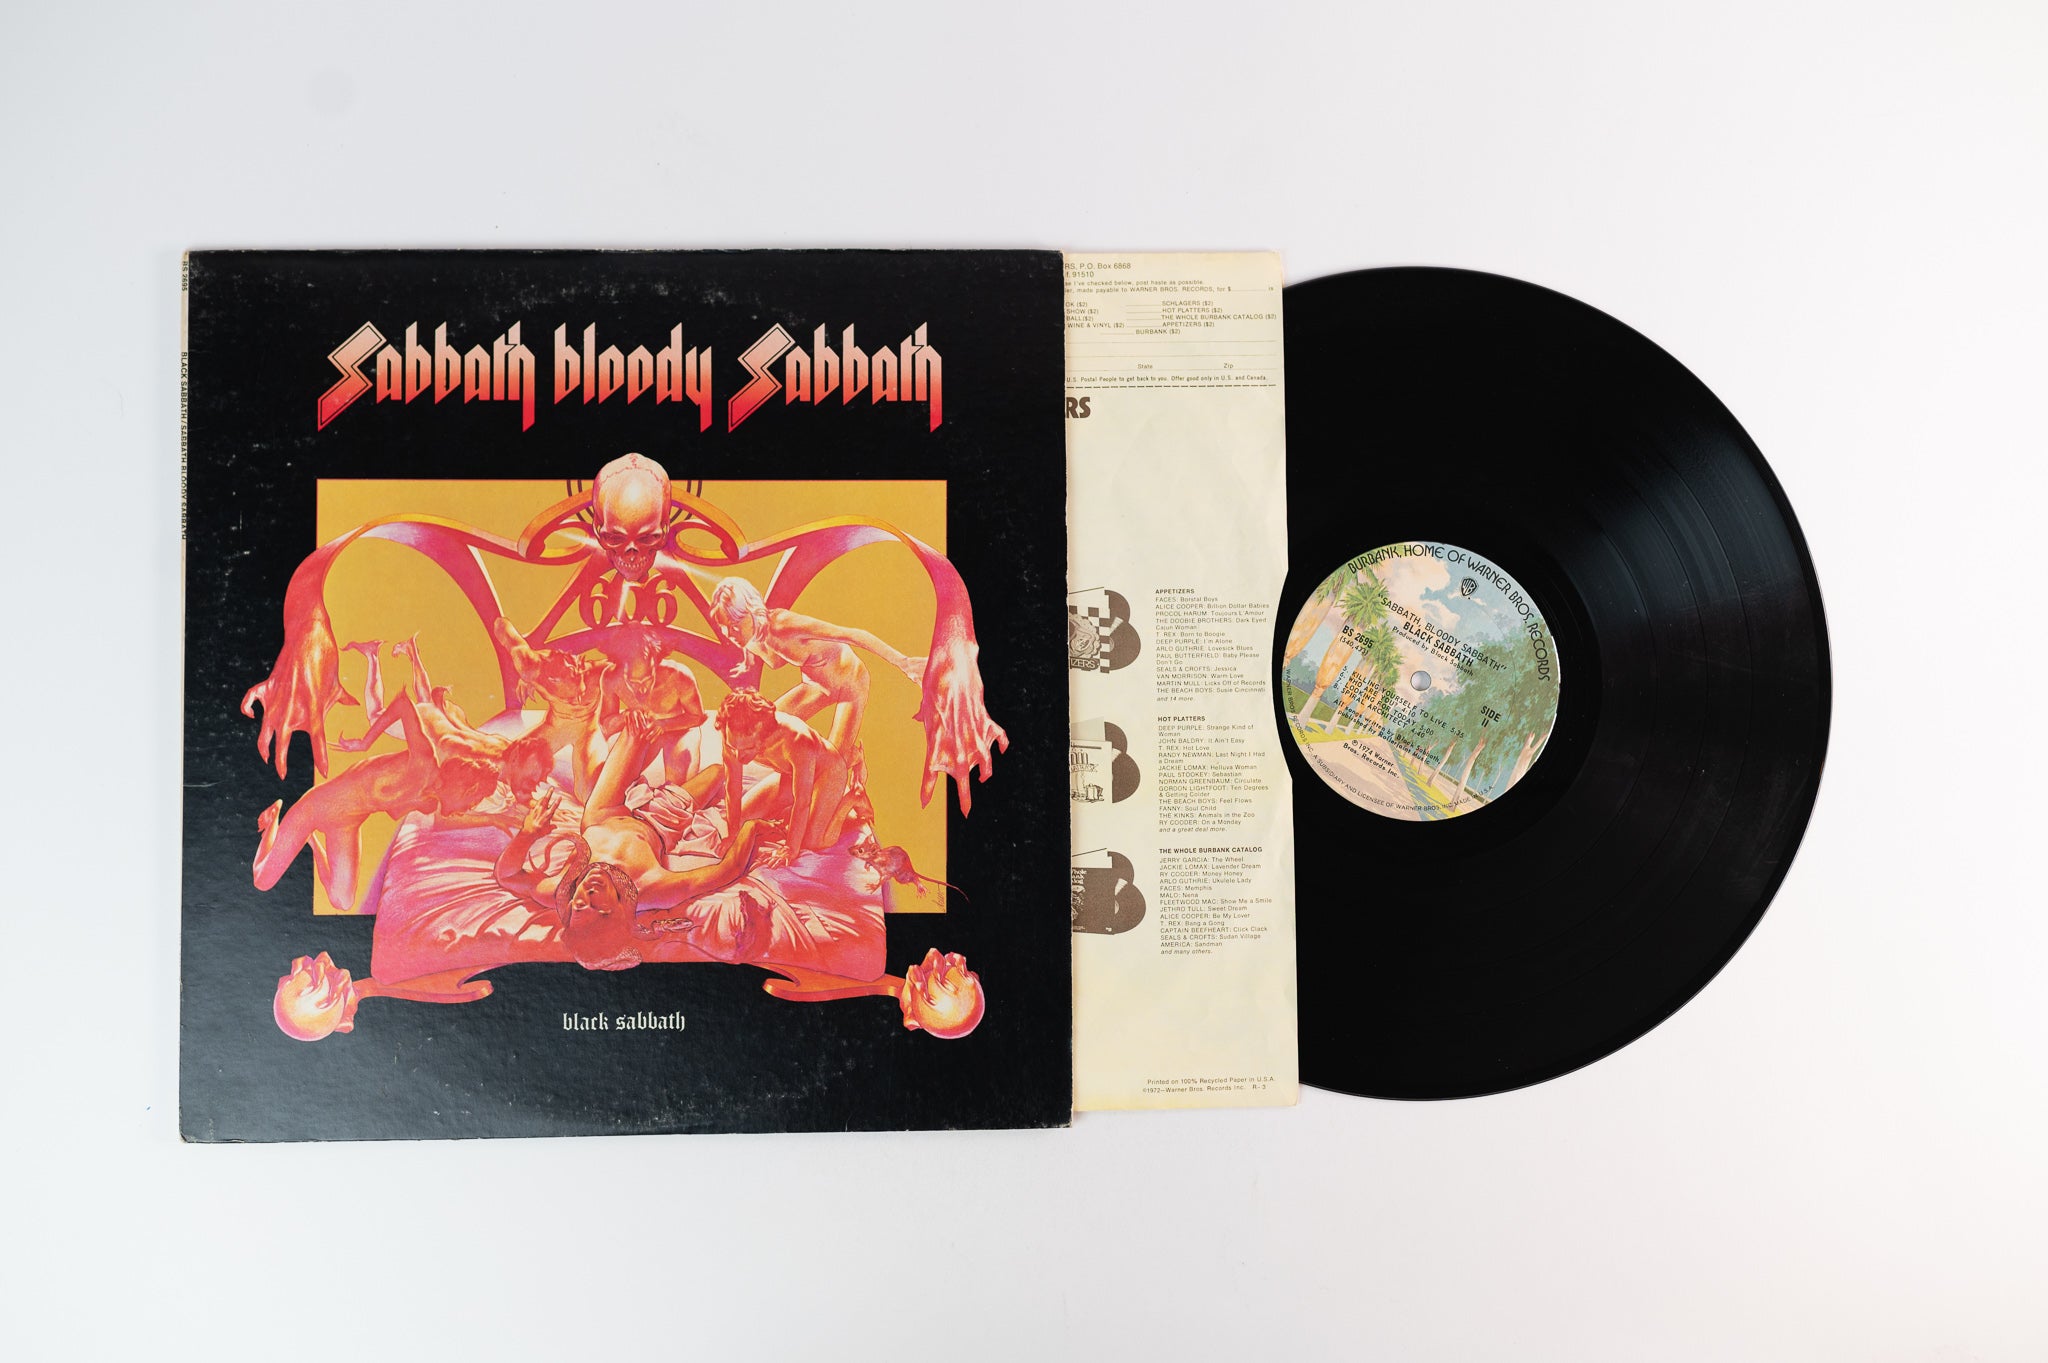 Black Sabbath - Sabbath, Bloody Sabbath on Warner Bros